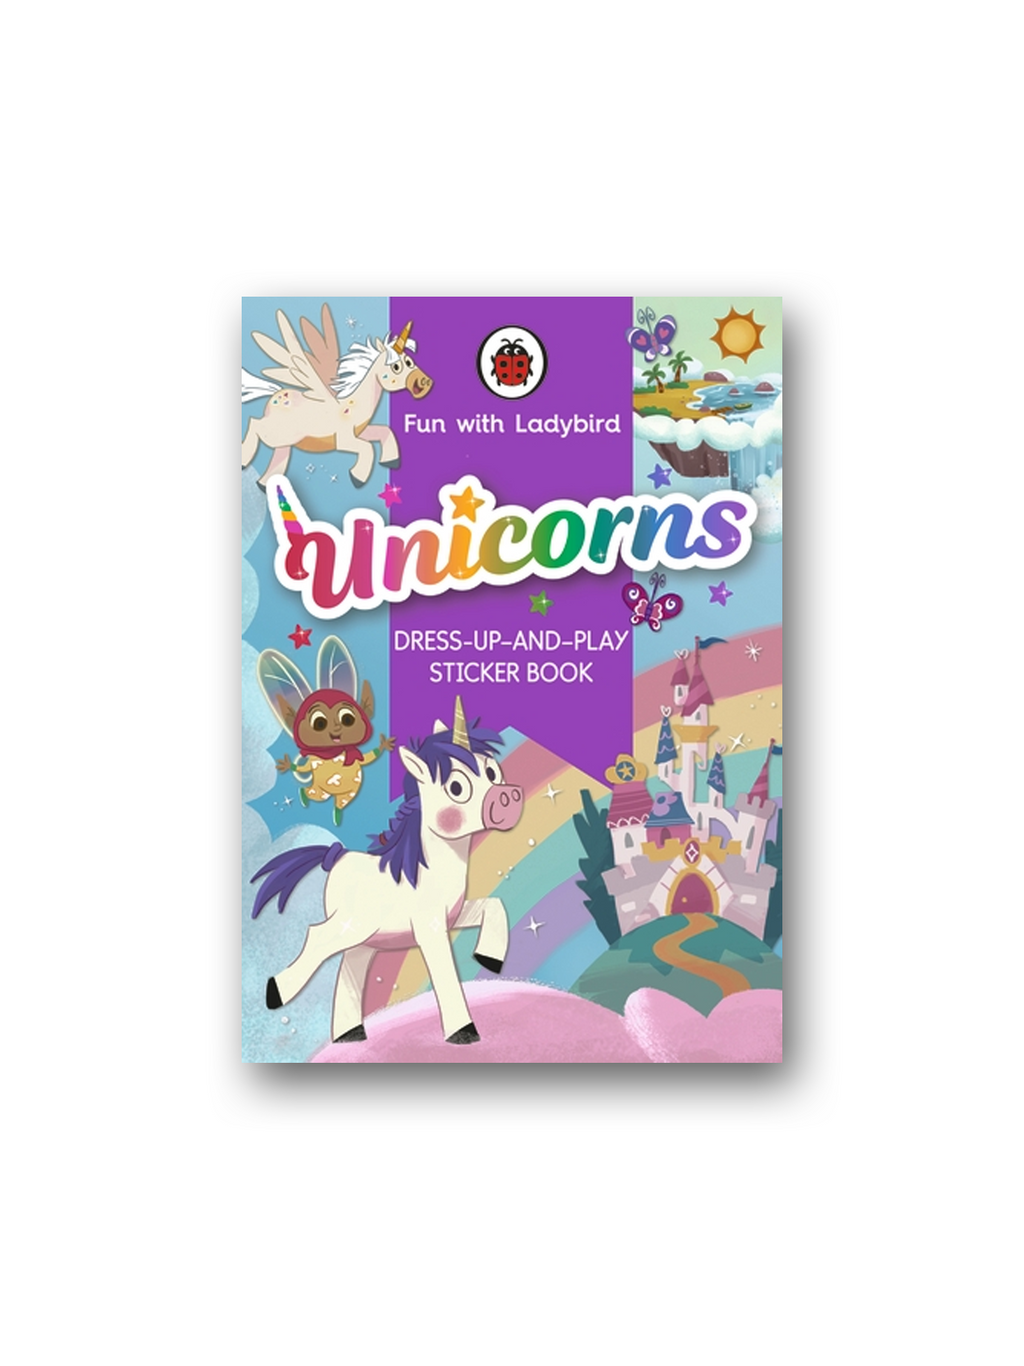 Fun with Ladybird: Dress-Up-And-Play Sticker Book: Unicorns